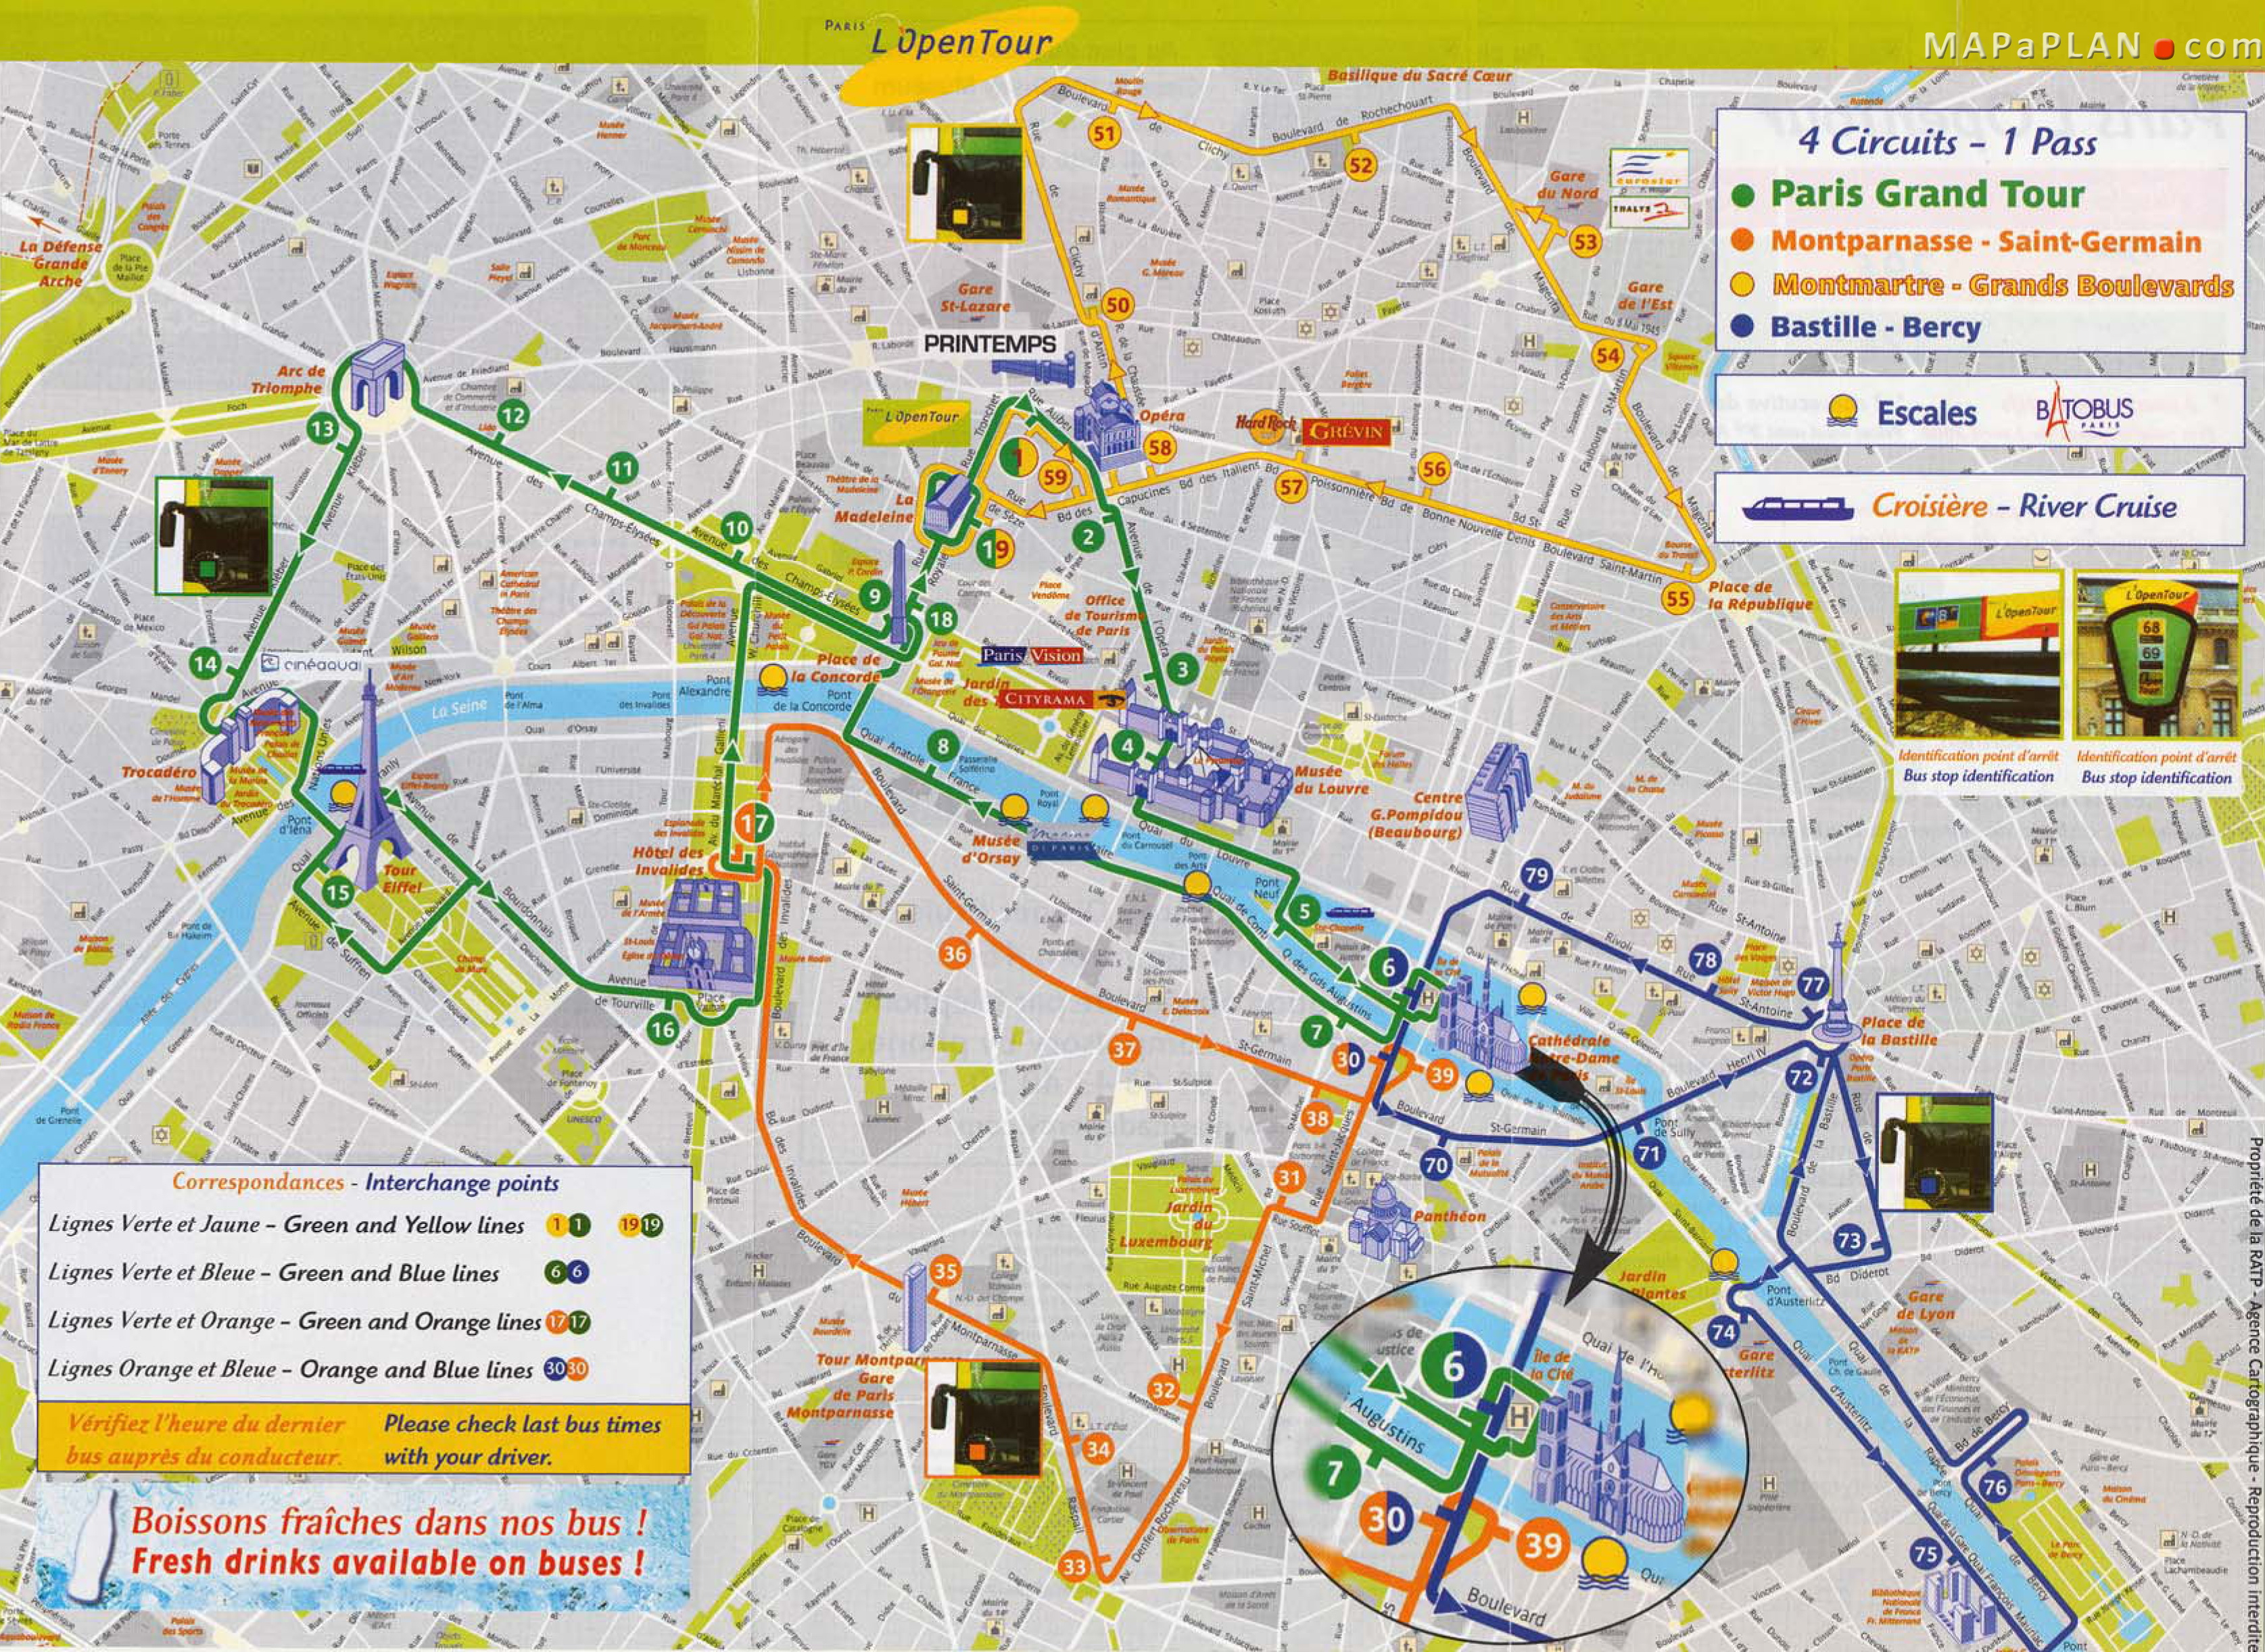 Printable Map Of Paris Download Map Paris And Attractions | Travel - Paris City Map Printable